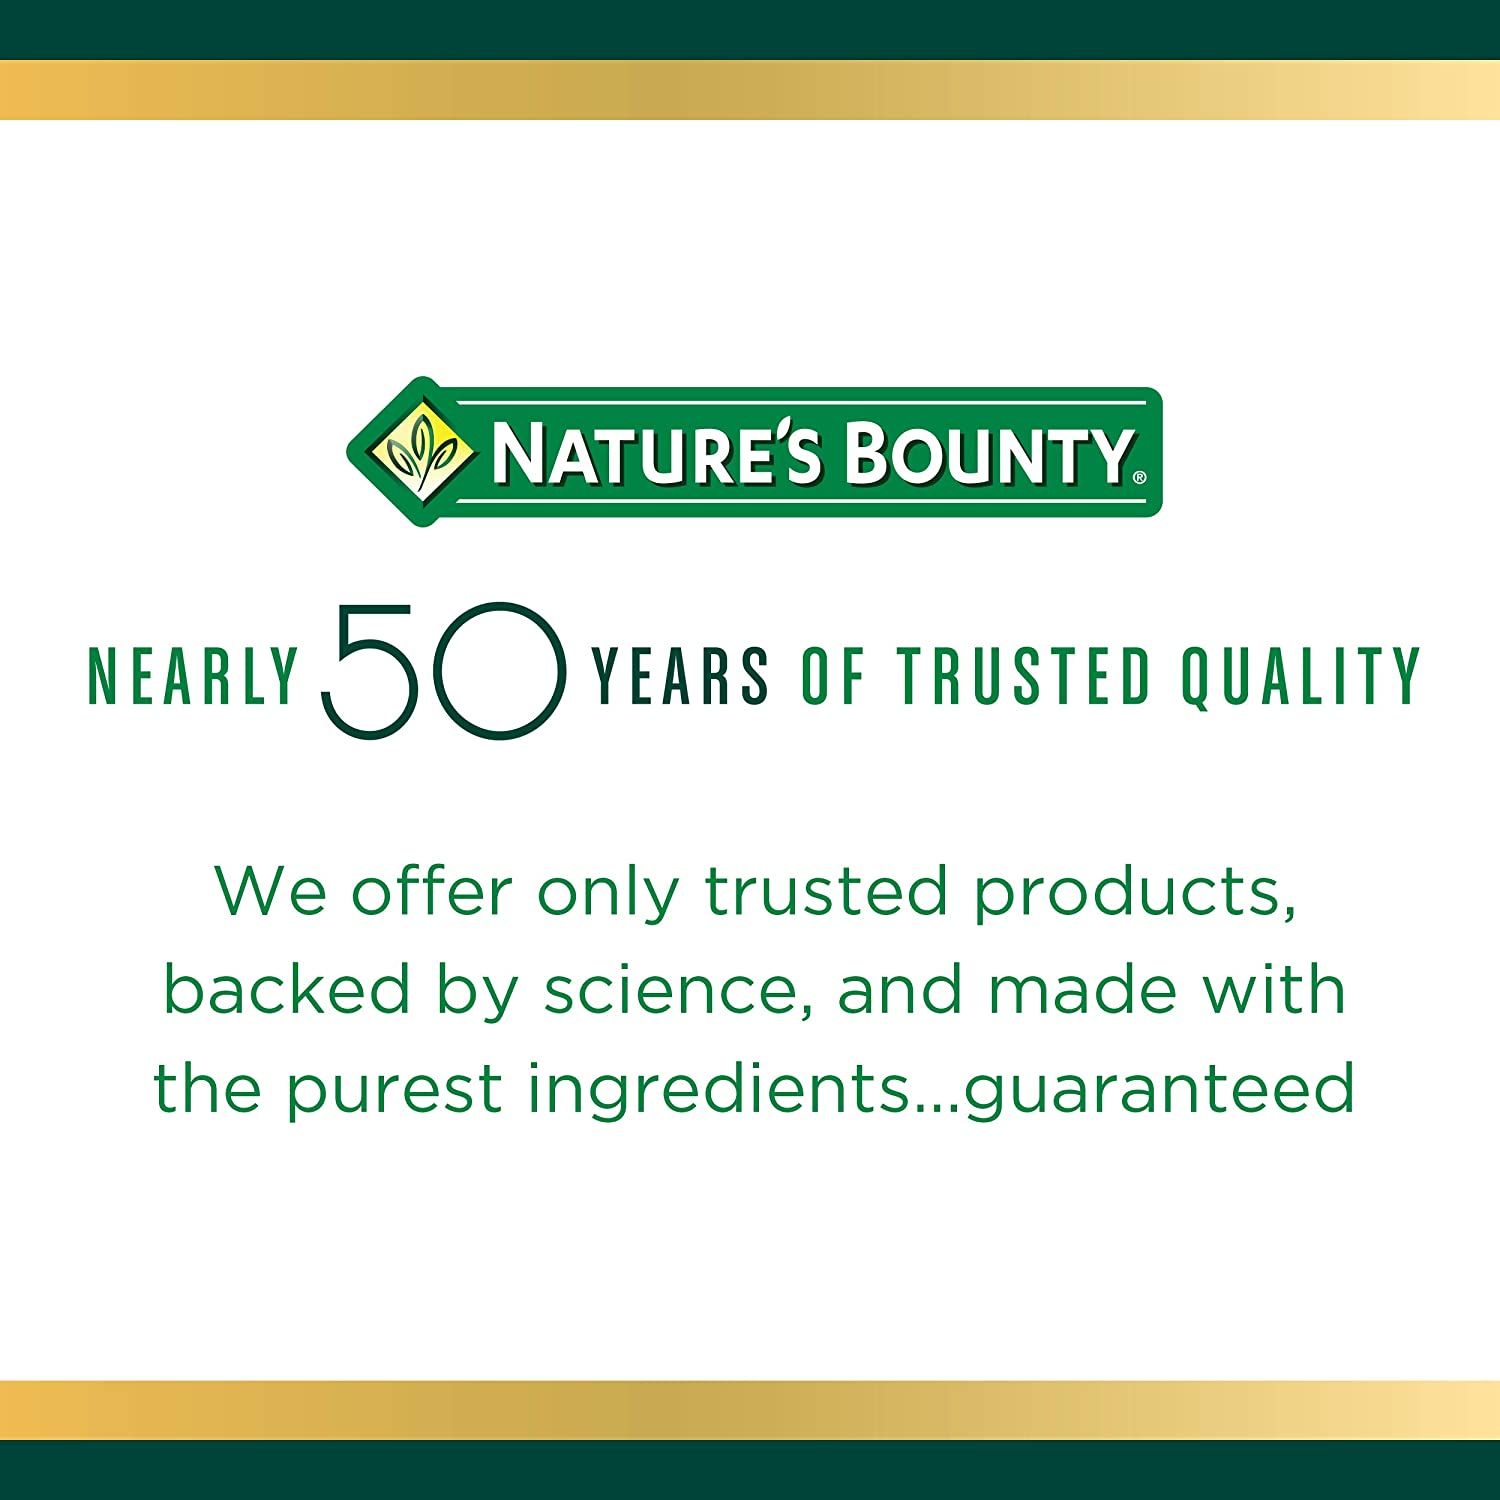 Nature's Bounty Saw Palmetto 450 mg Capsules - 250 ct